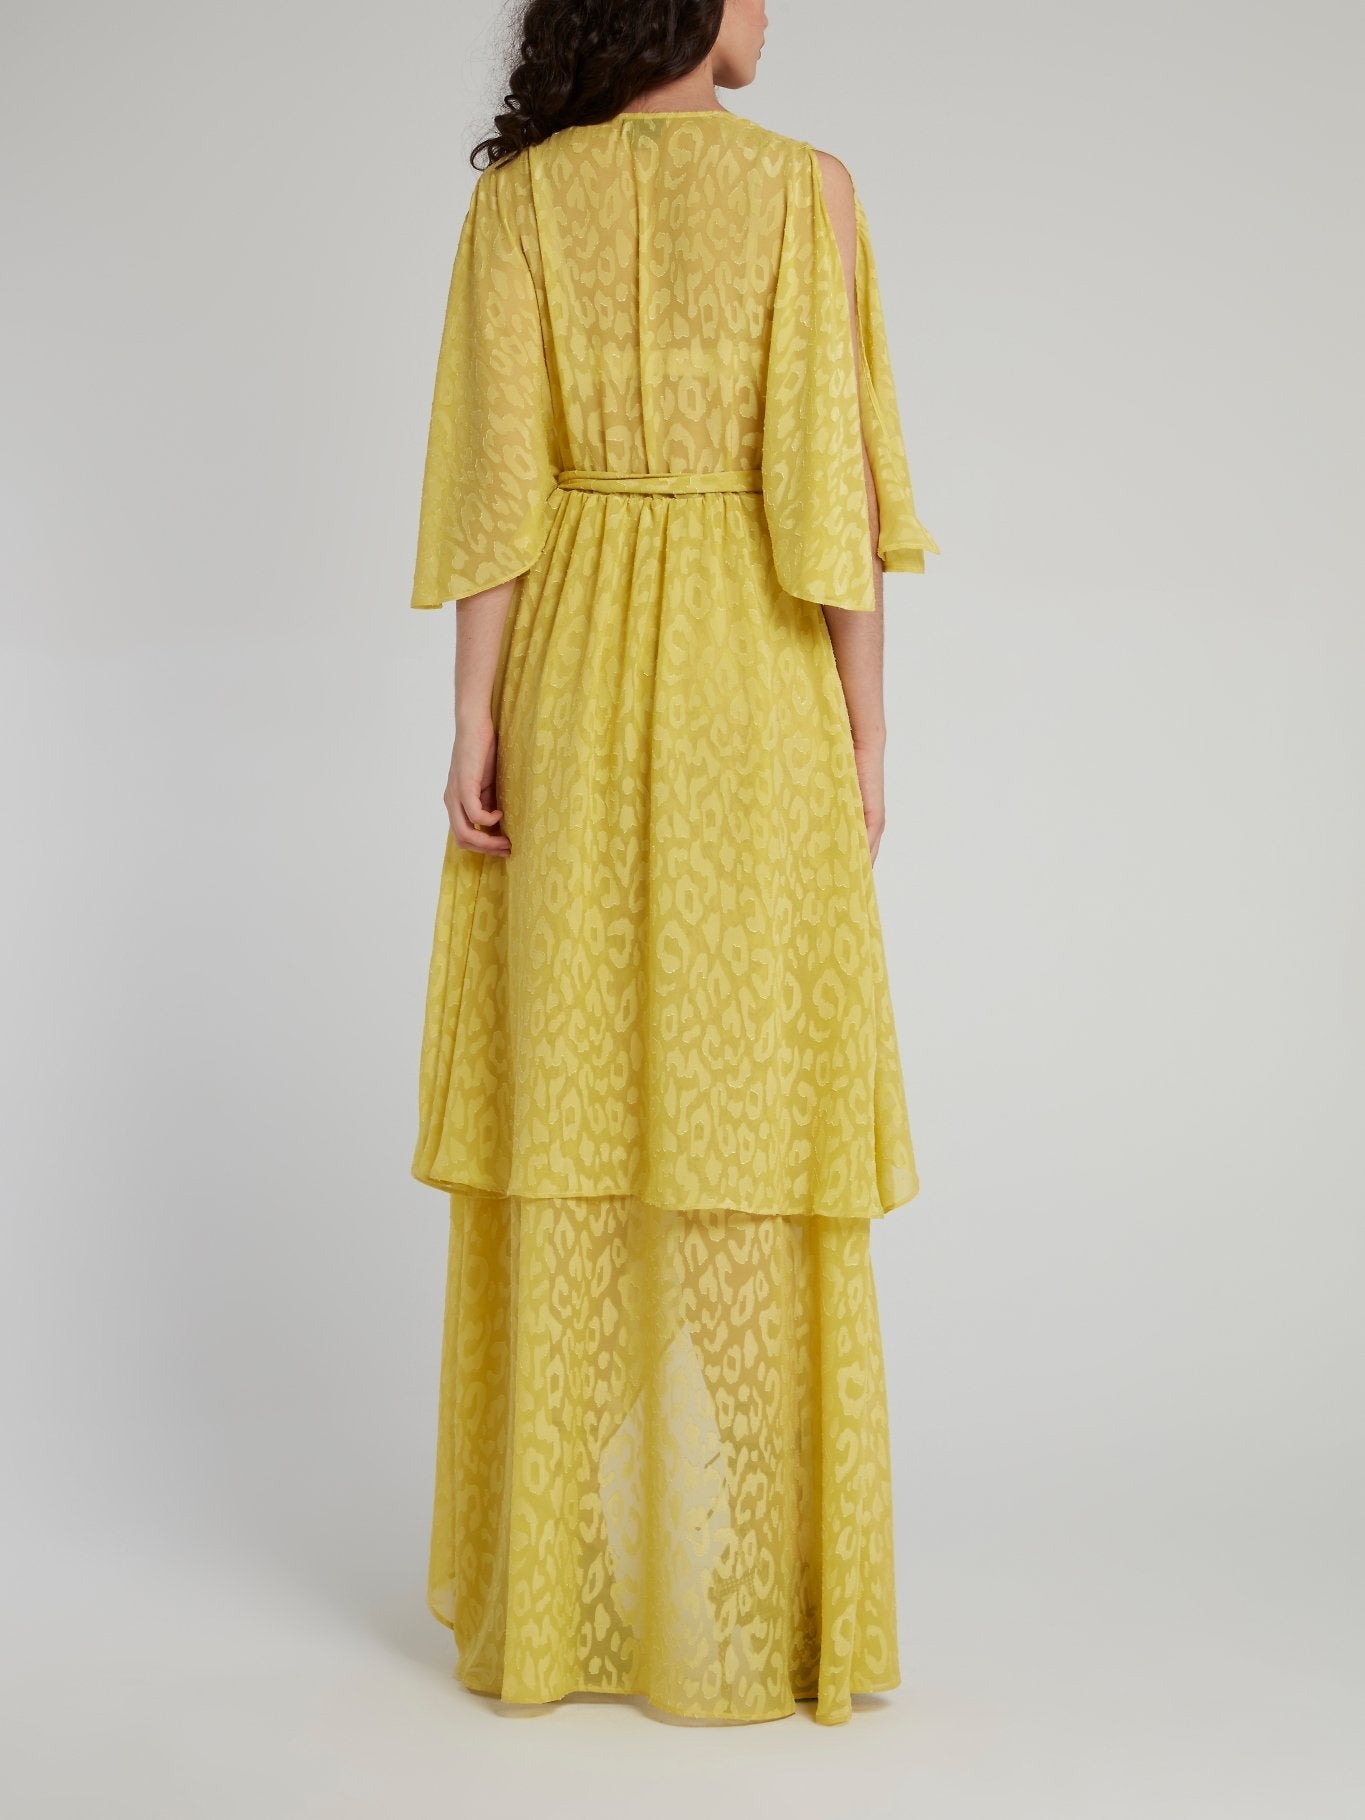 Yellow Leopard Print High-Low Maxi Dress